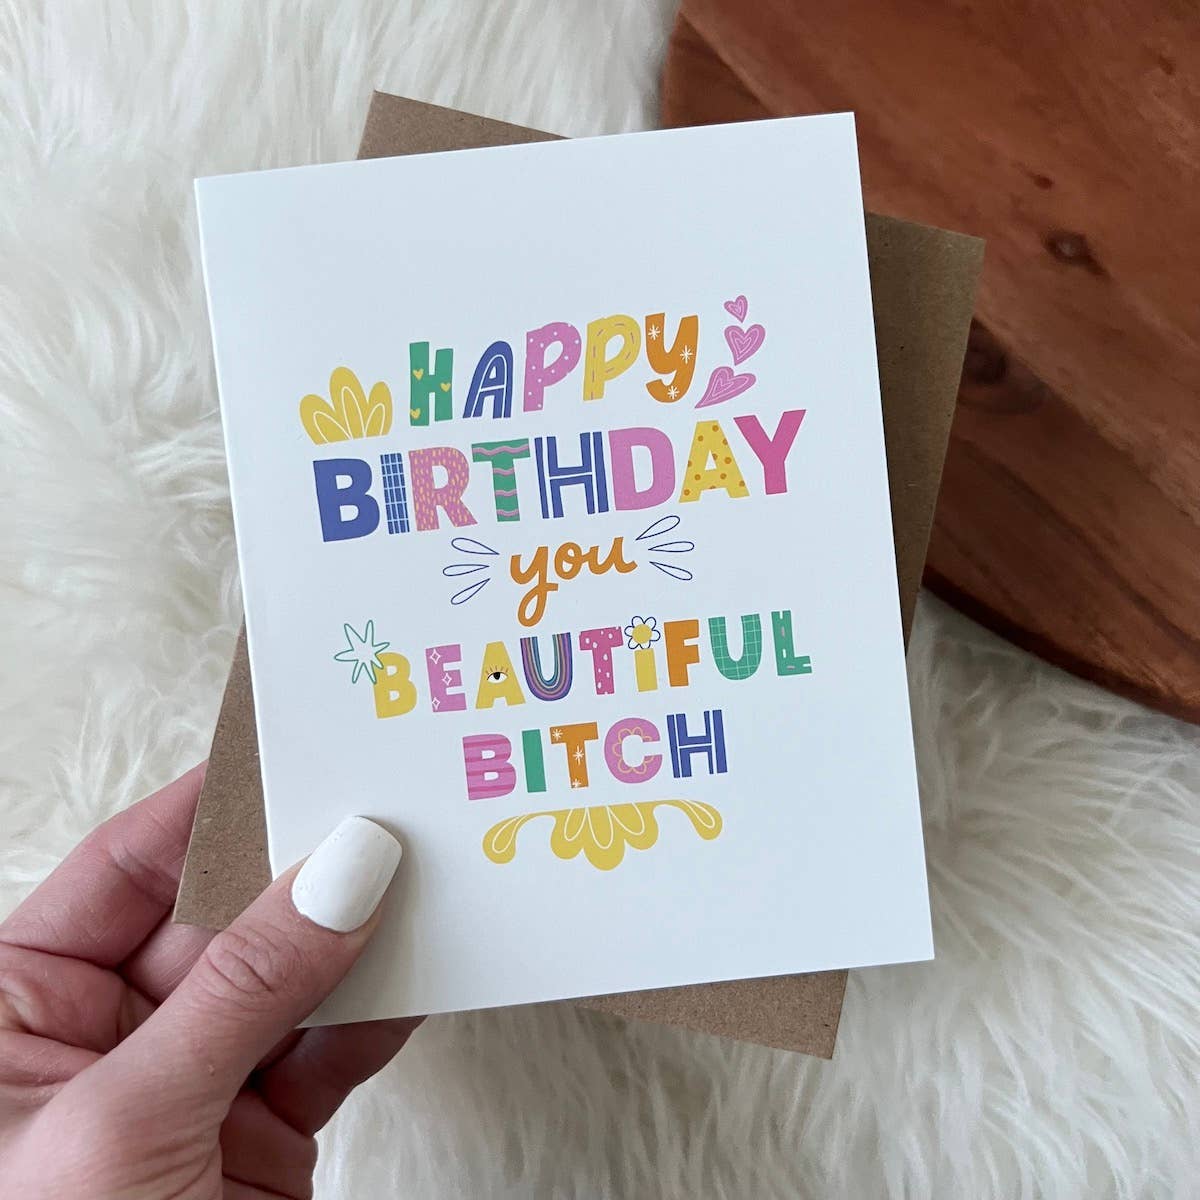 "Happy Birthday you Beautiful Bit**" Greeting Card